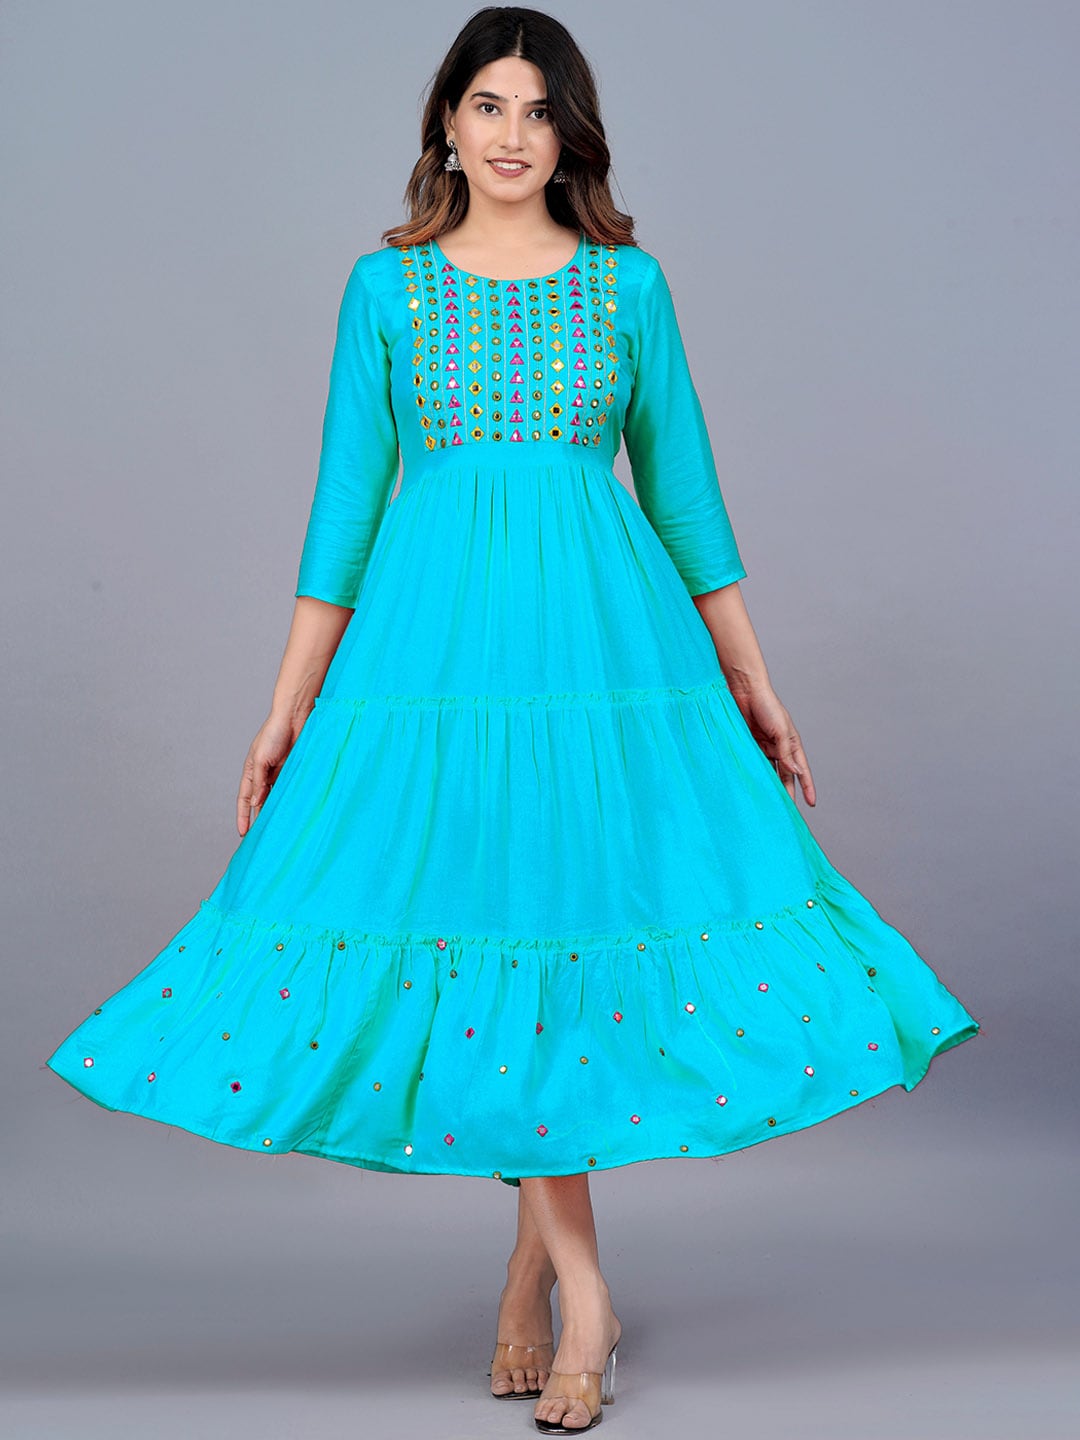 KALINI Turquoise Blue & Purple Embellished Embroidered Ethnic Midi Dress Price in India